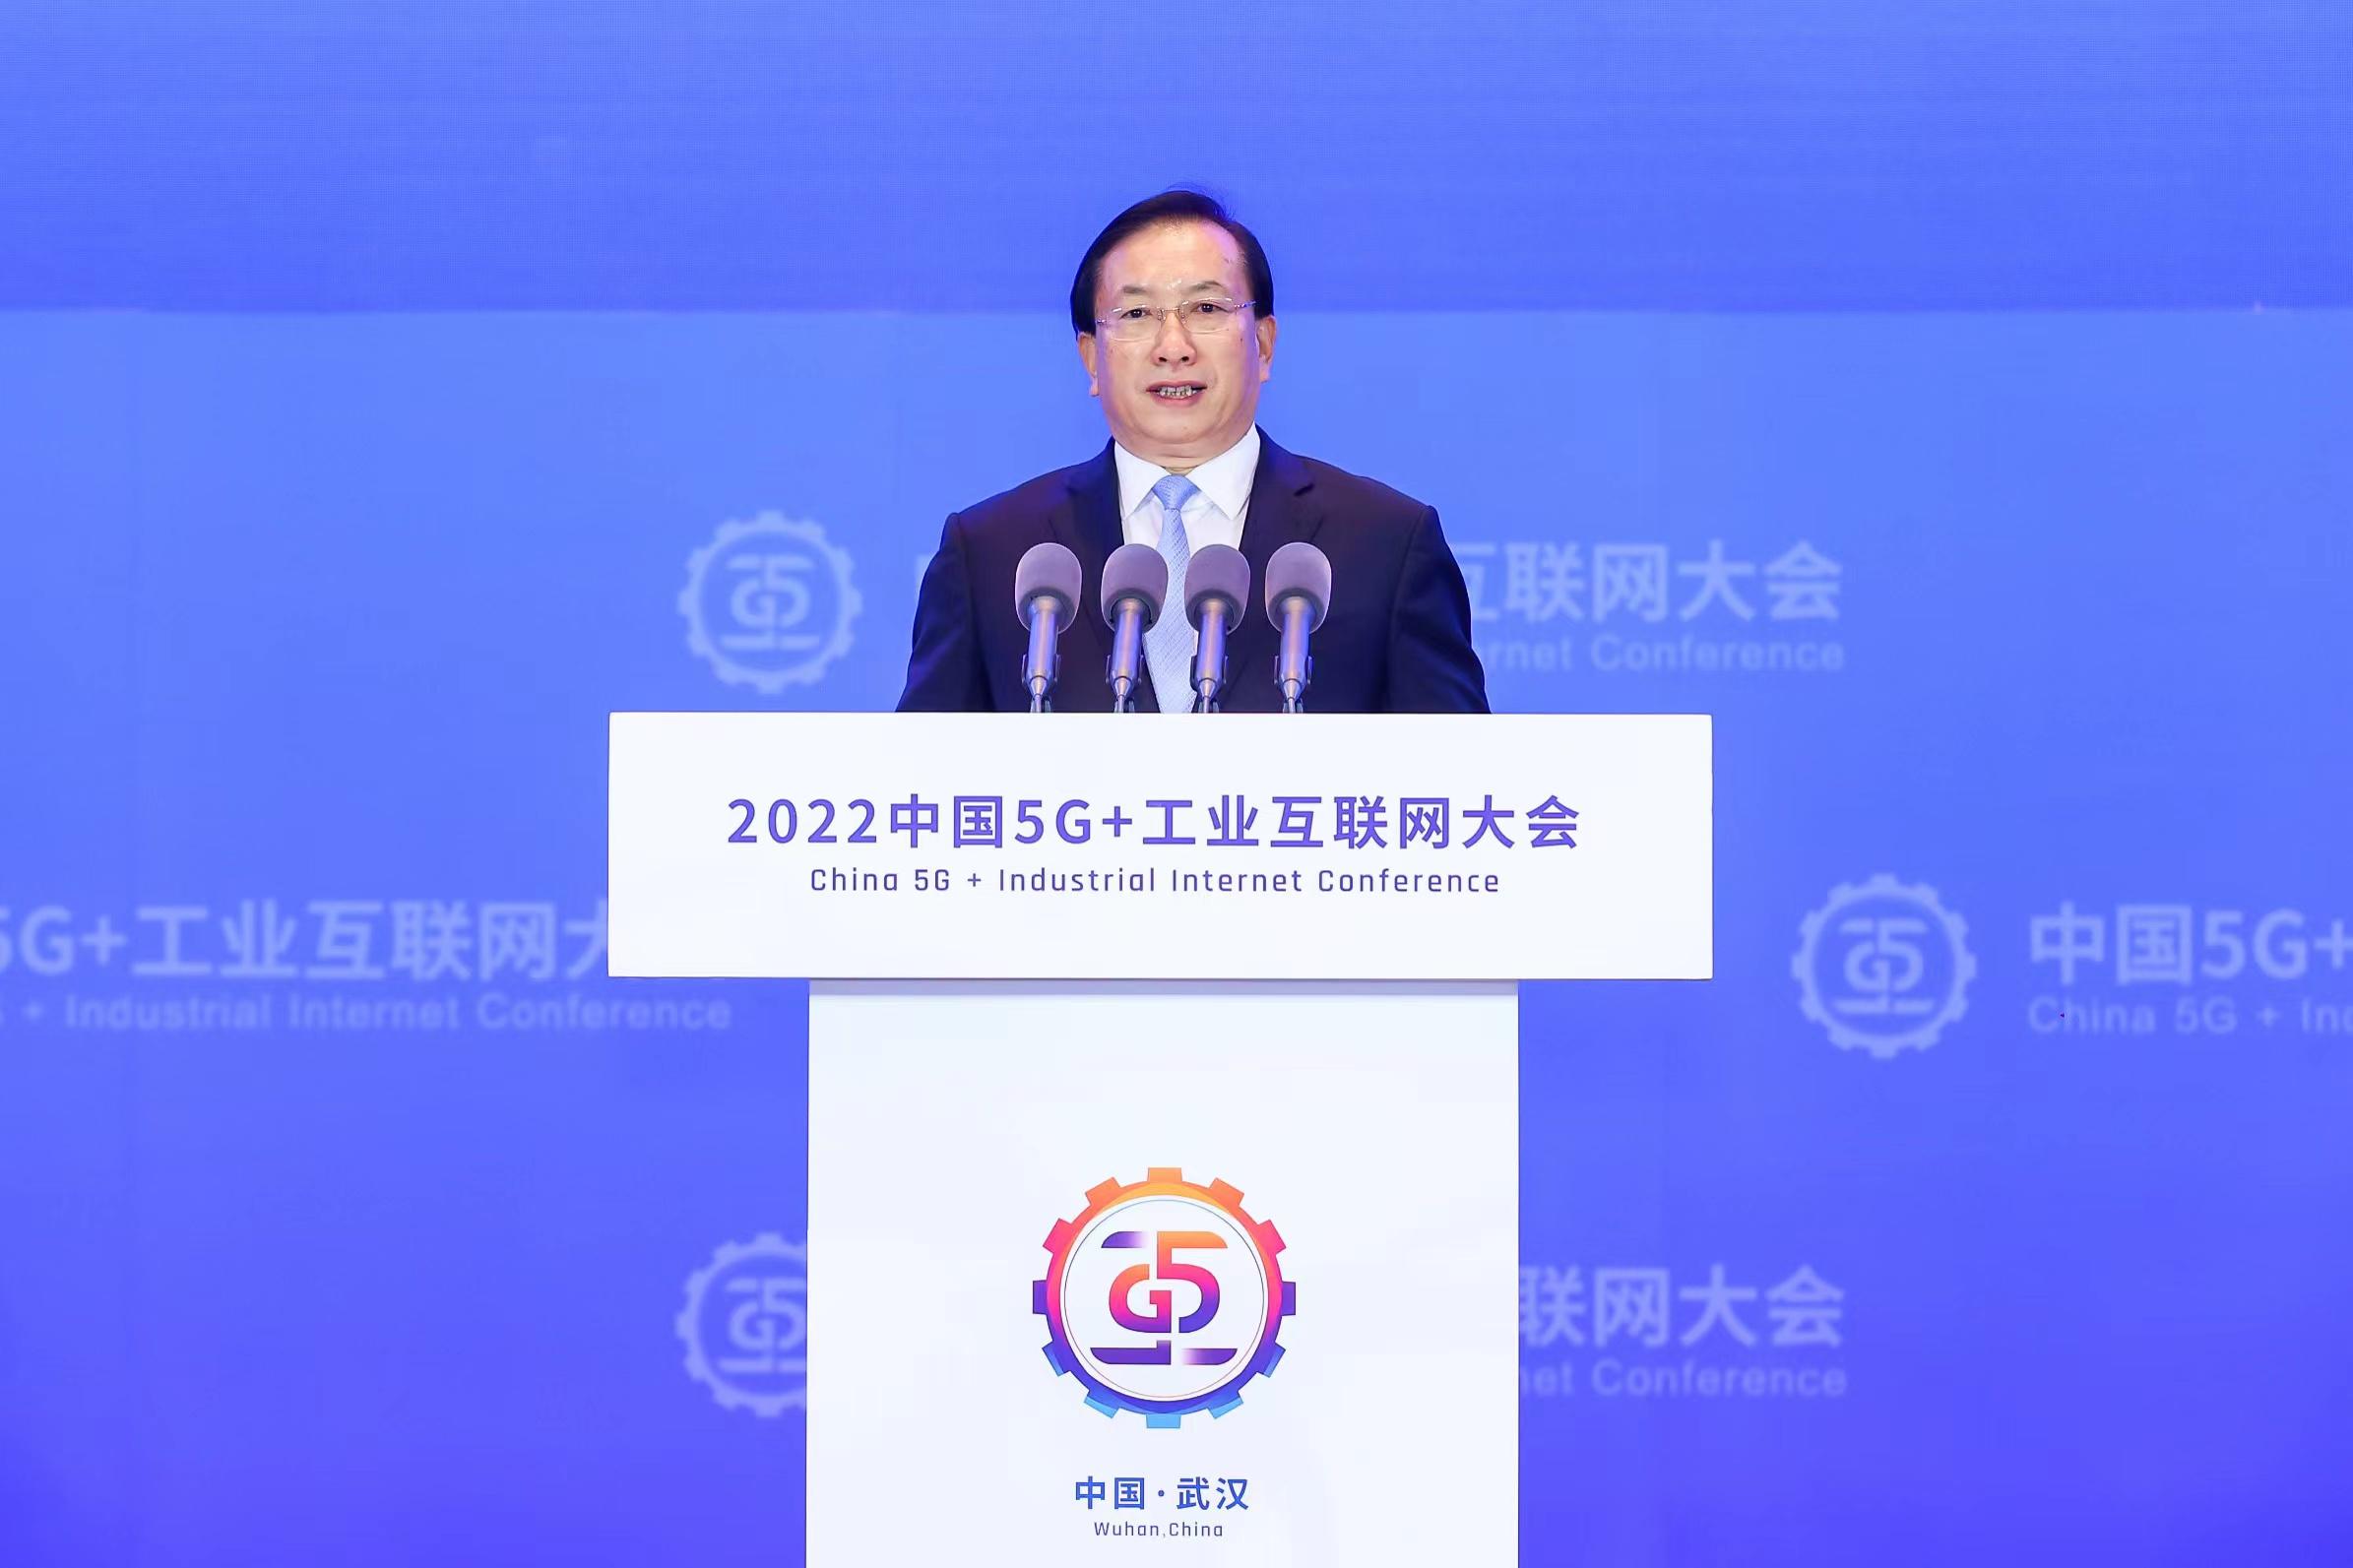 5G+工业互联网迎来湖北时间 王忠林称为数字中国做贡献